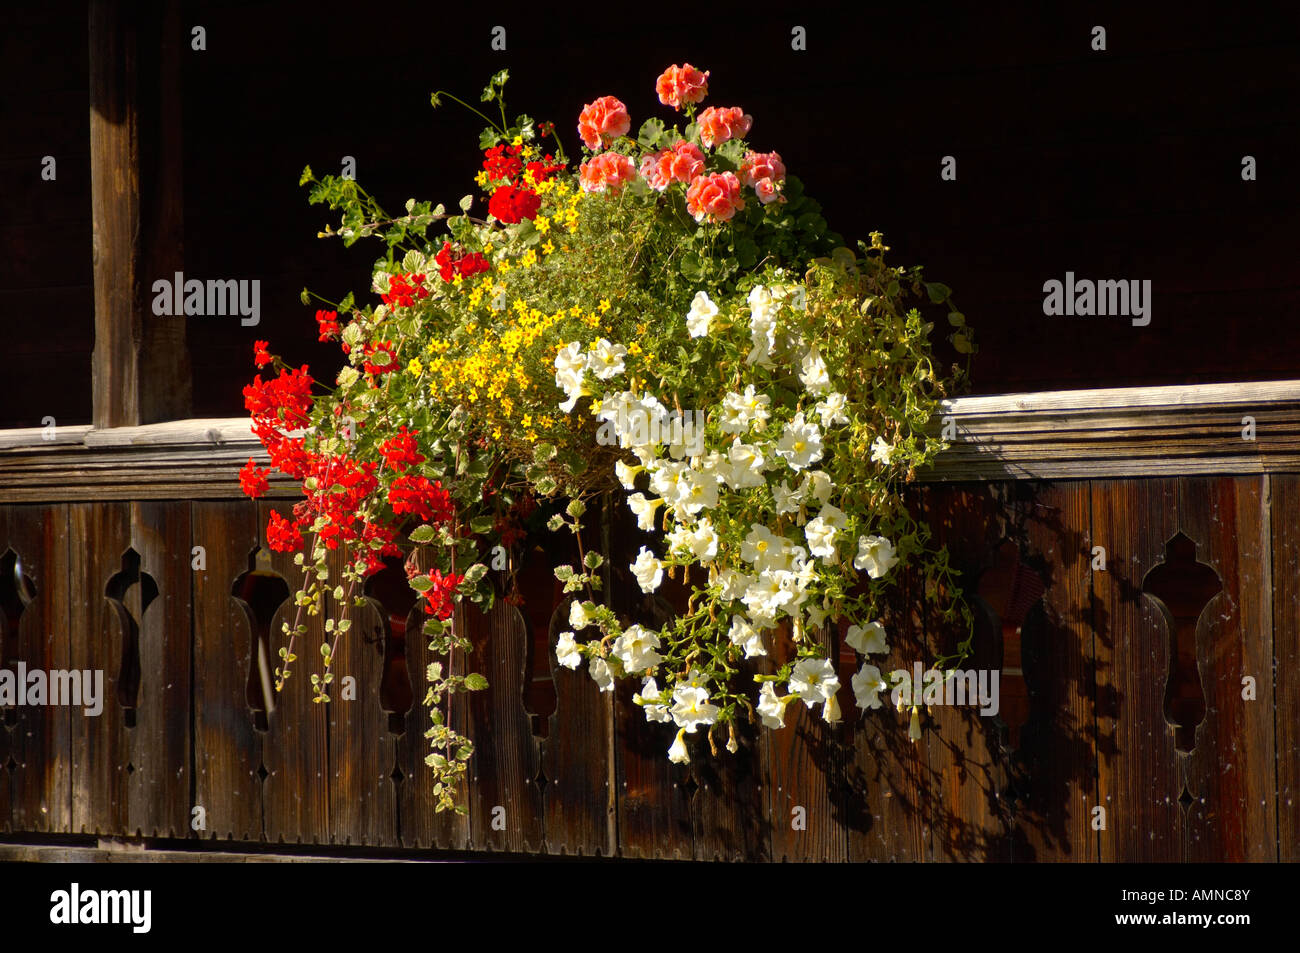 Cuadro de flores en un chalet suizo tradicional de madera. Foto de stock